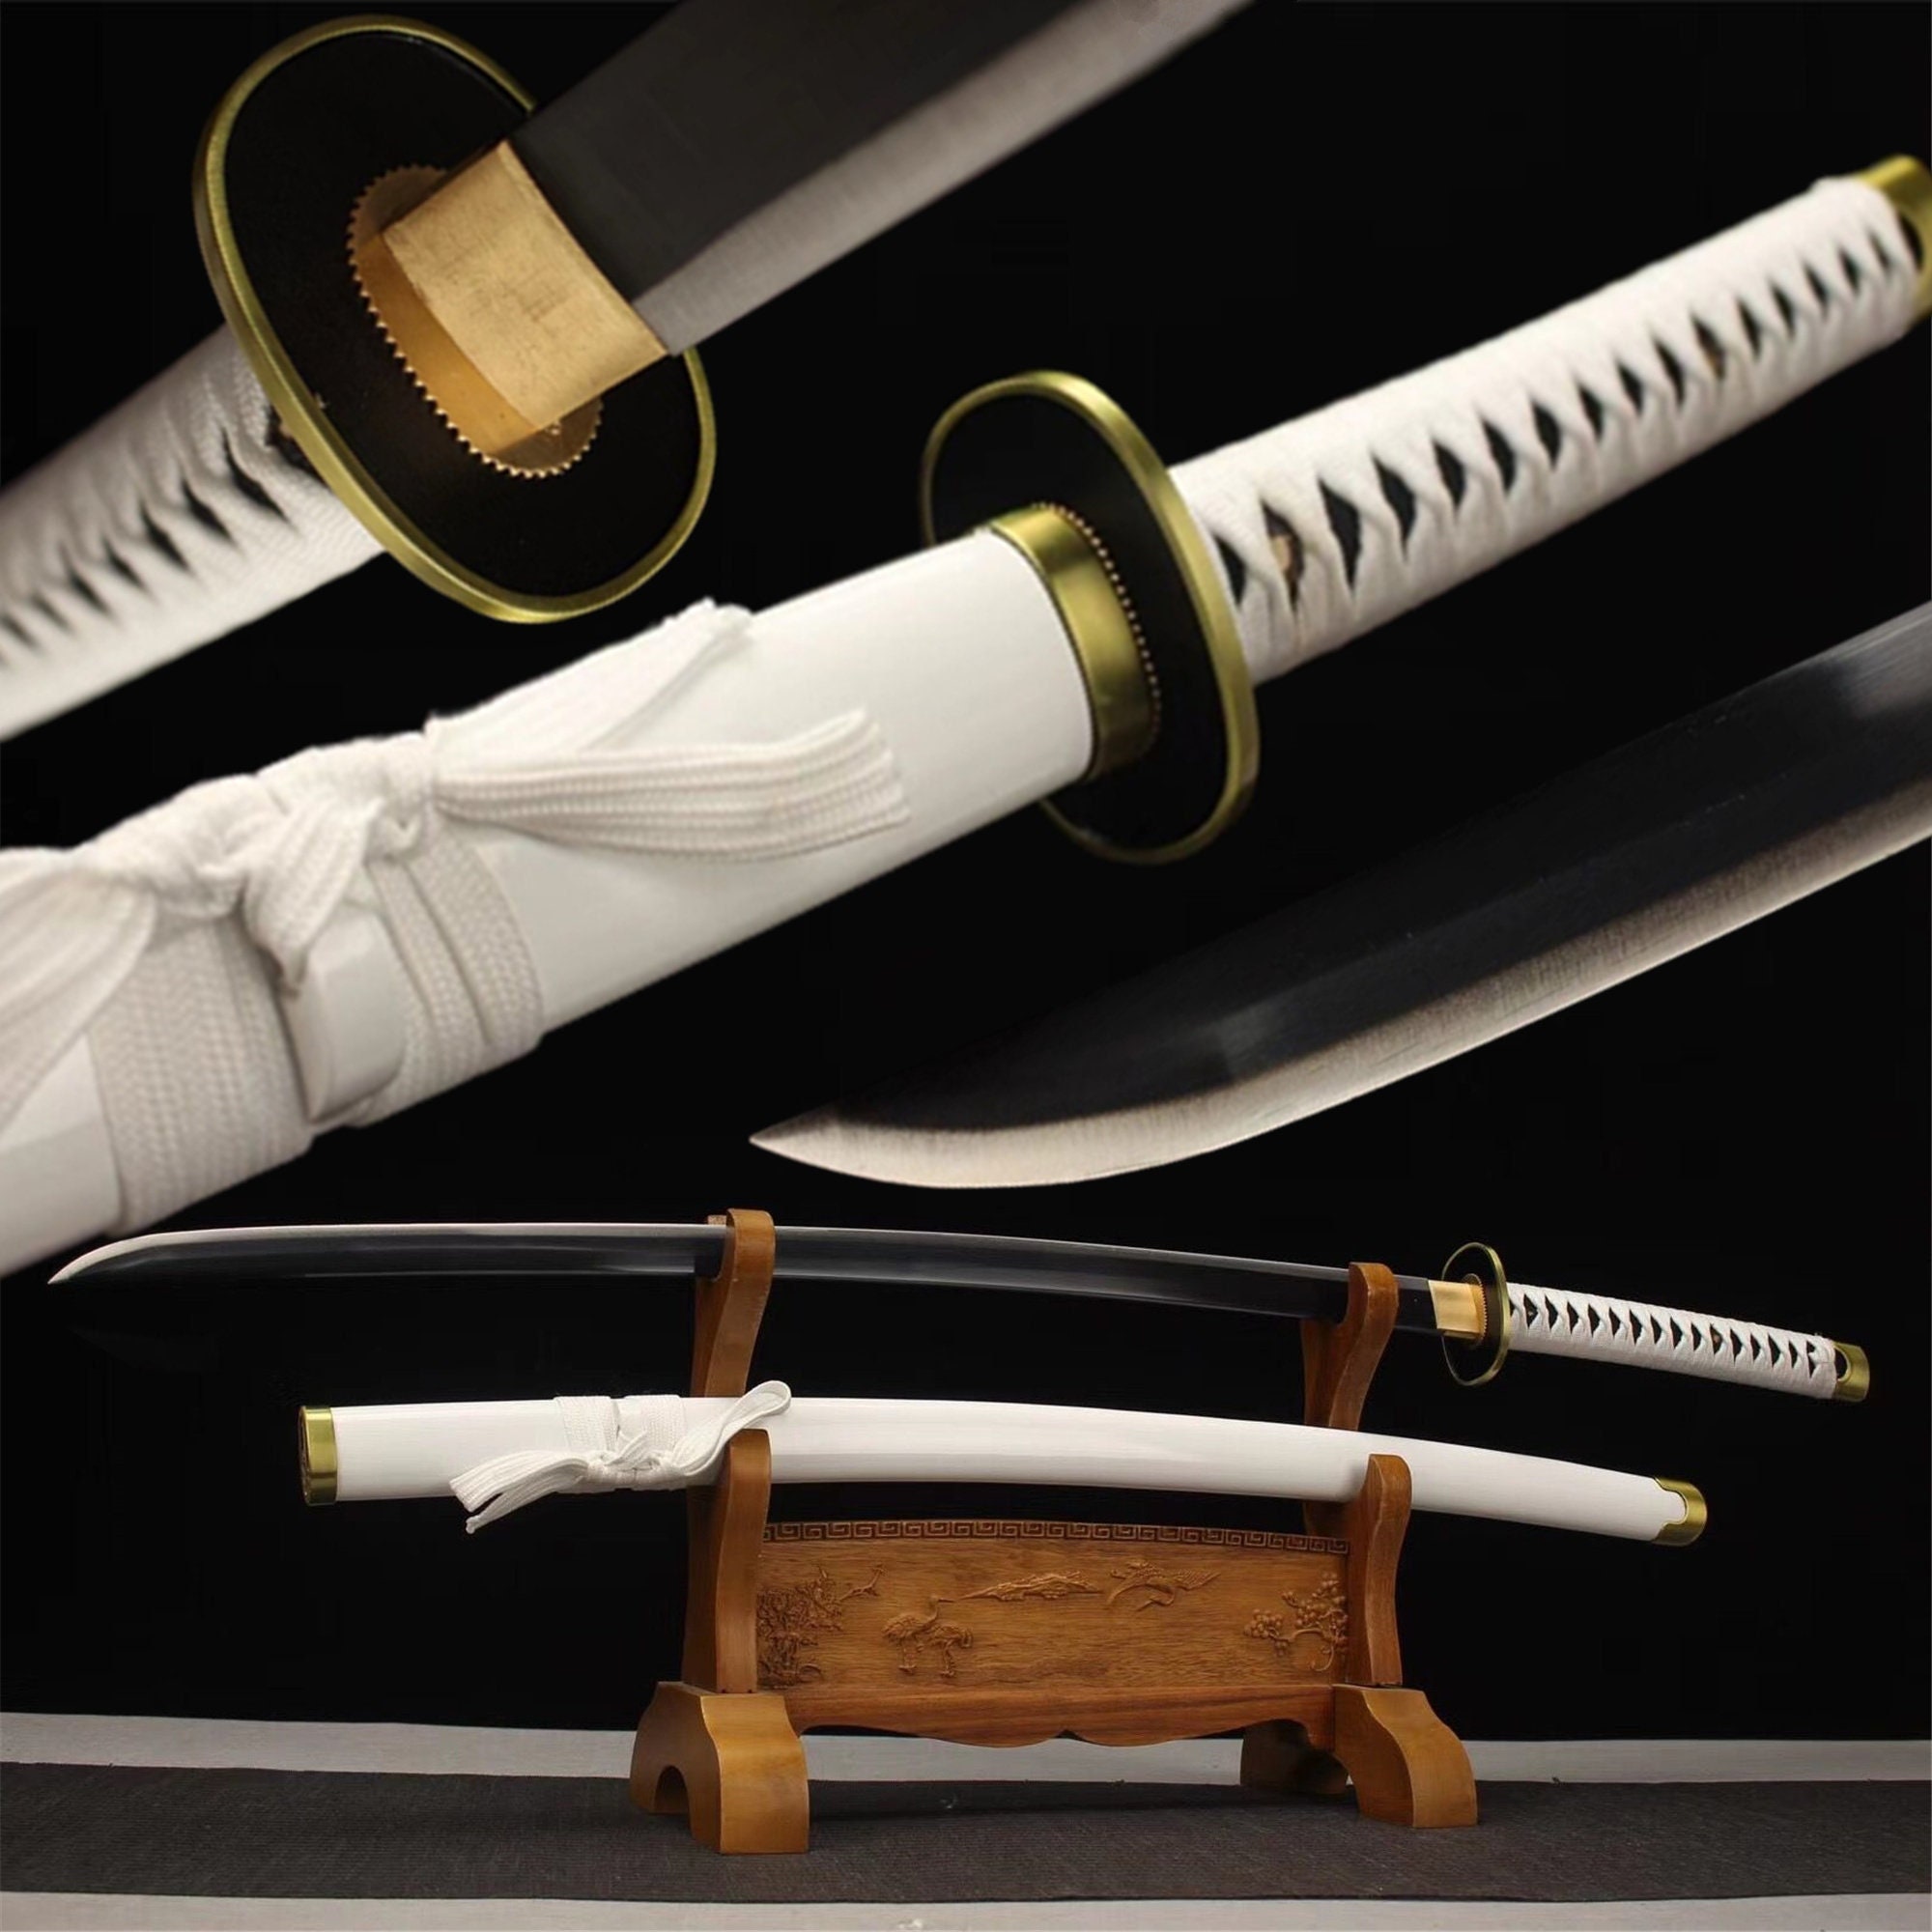 80cm One piece Bamboo wood Toys Swords - Manga Fun Shop